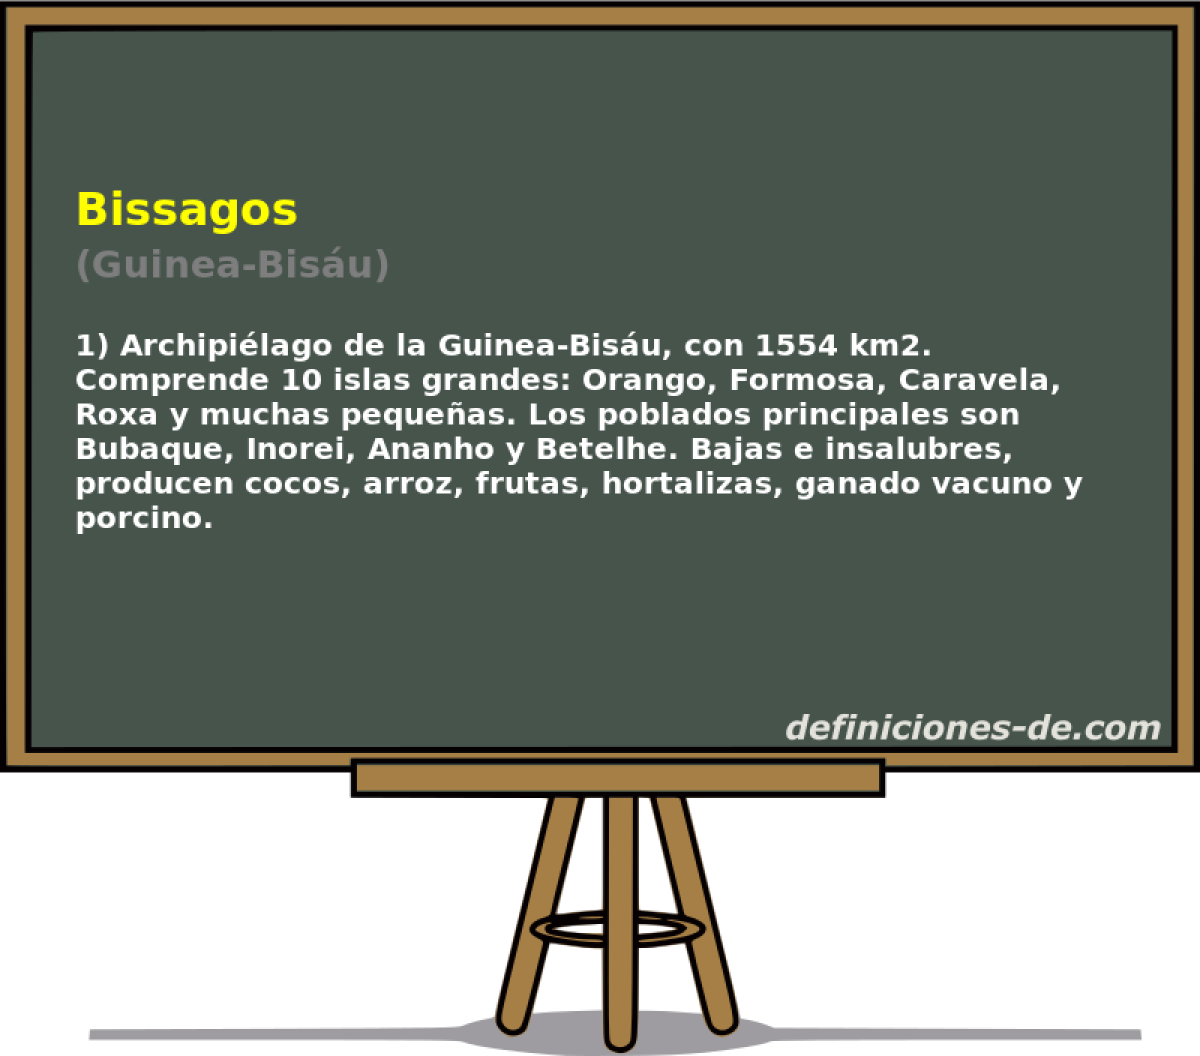 Bissagos (Guinea-Bisu)